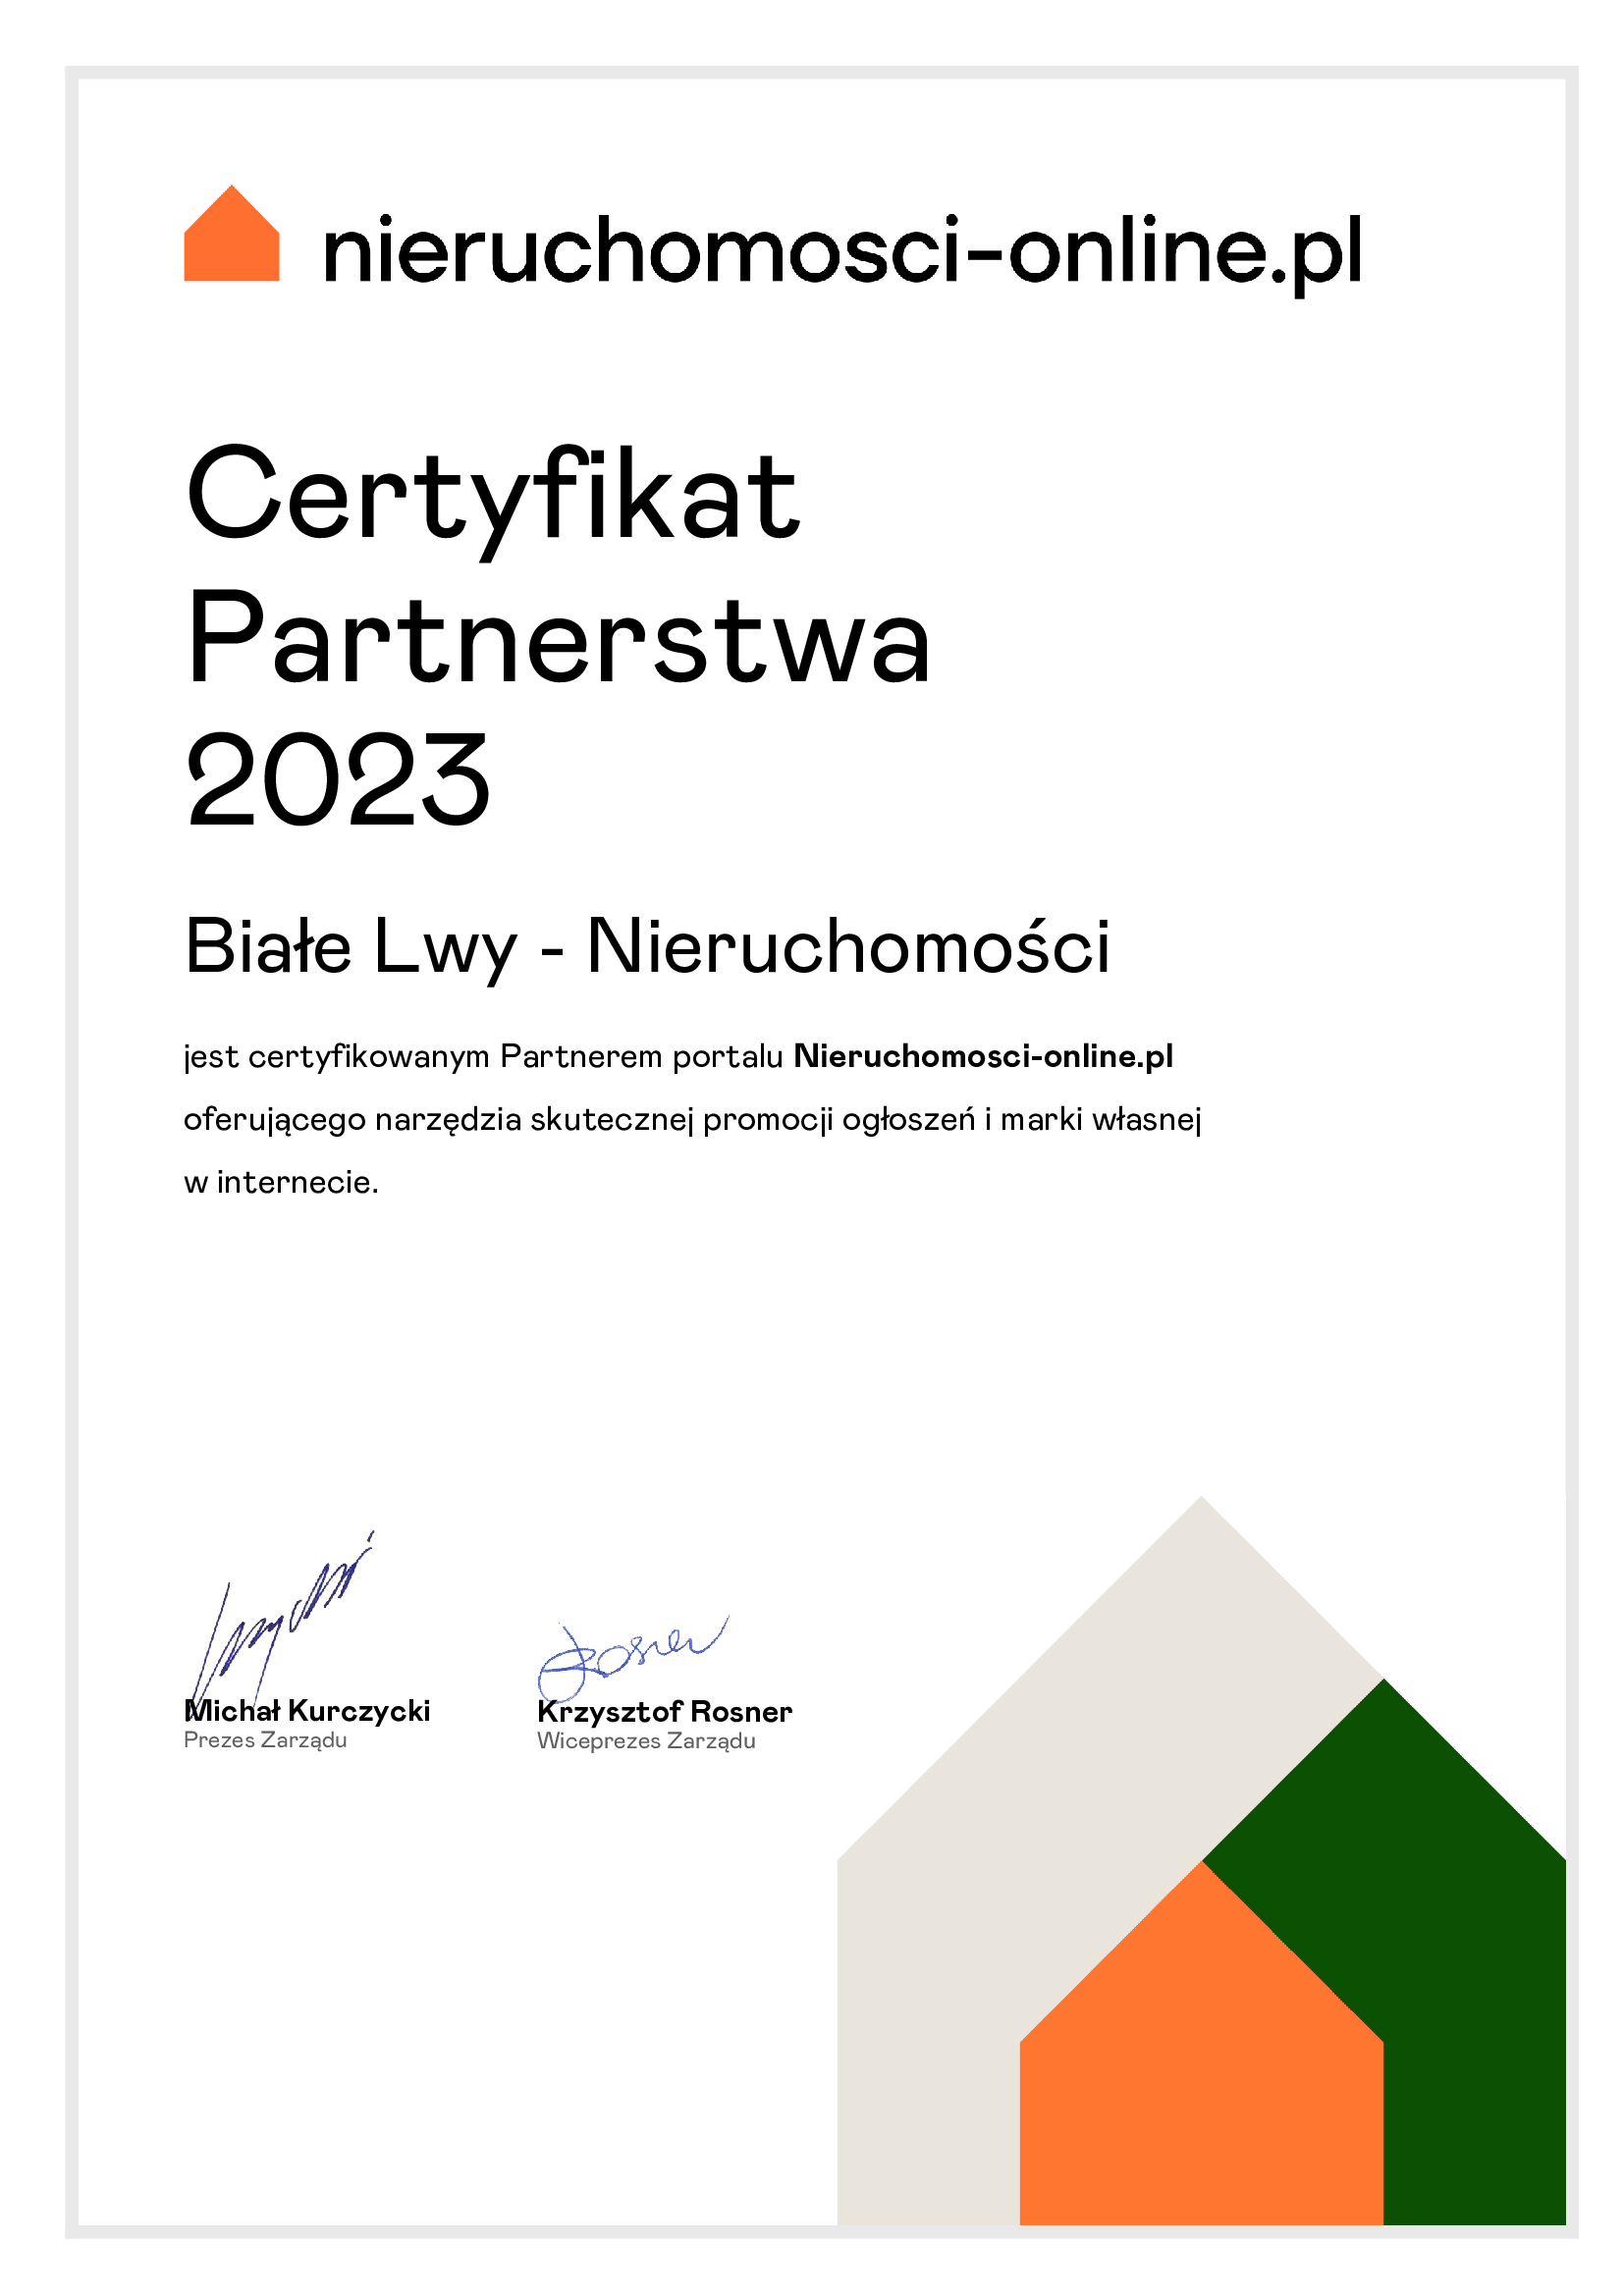 Certyfikat Partnerstwa nieruchomości-online.pl